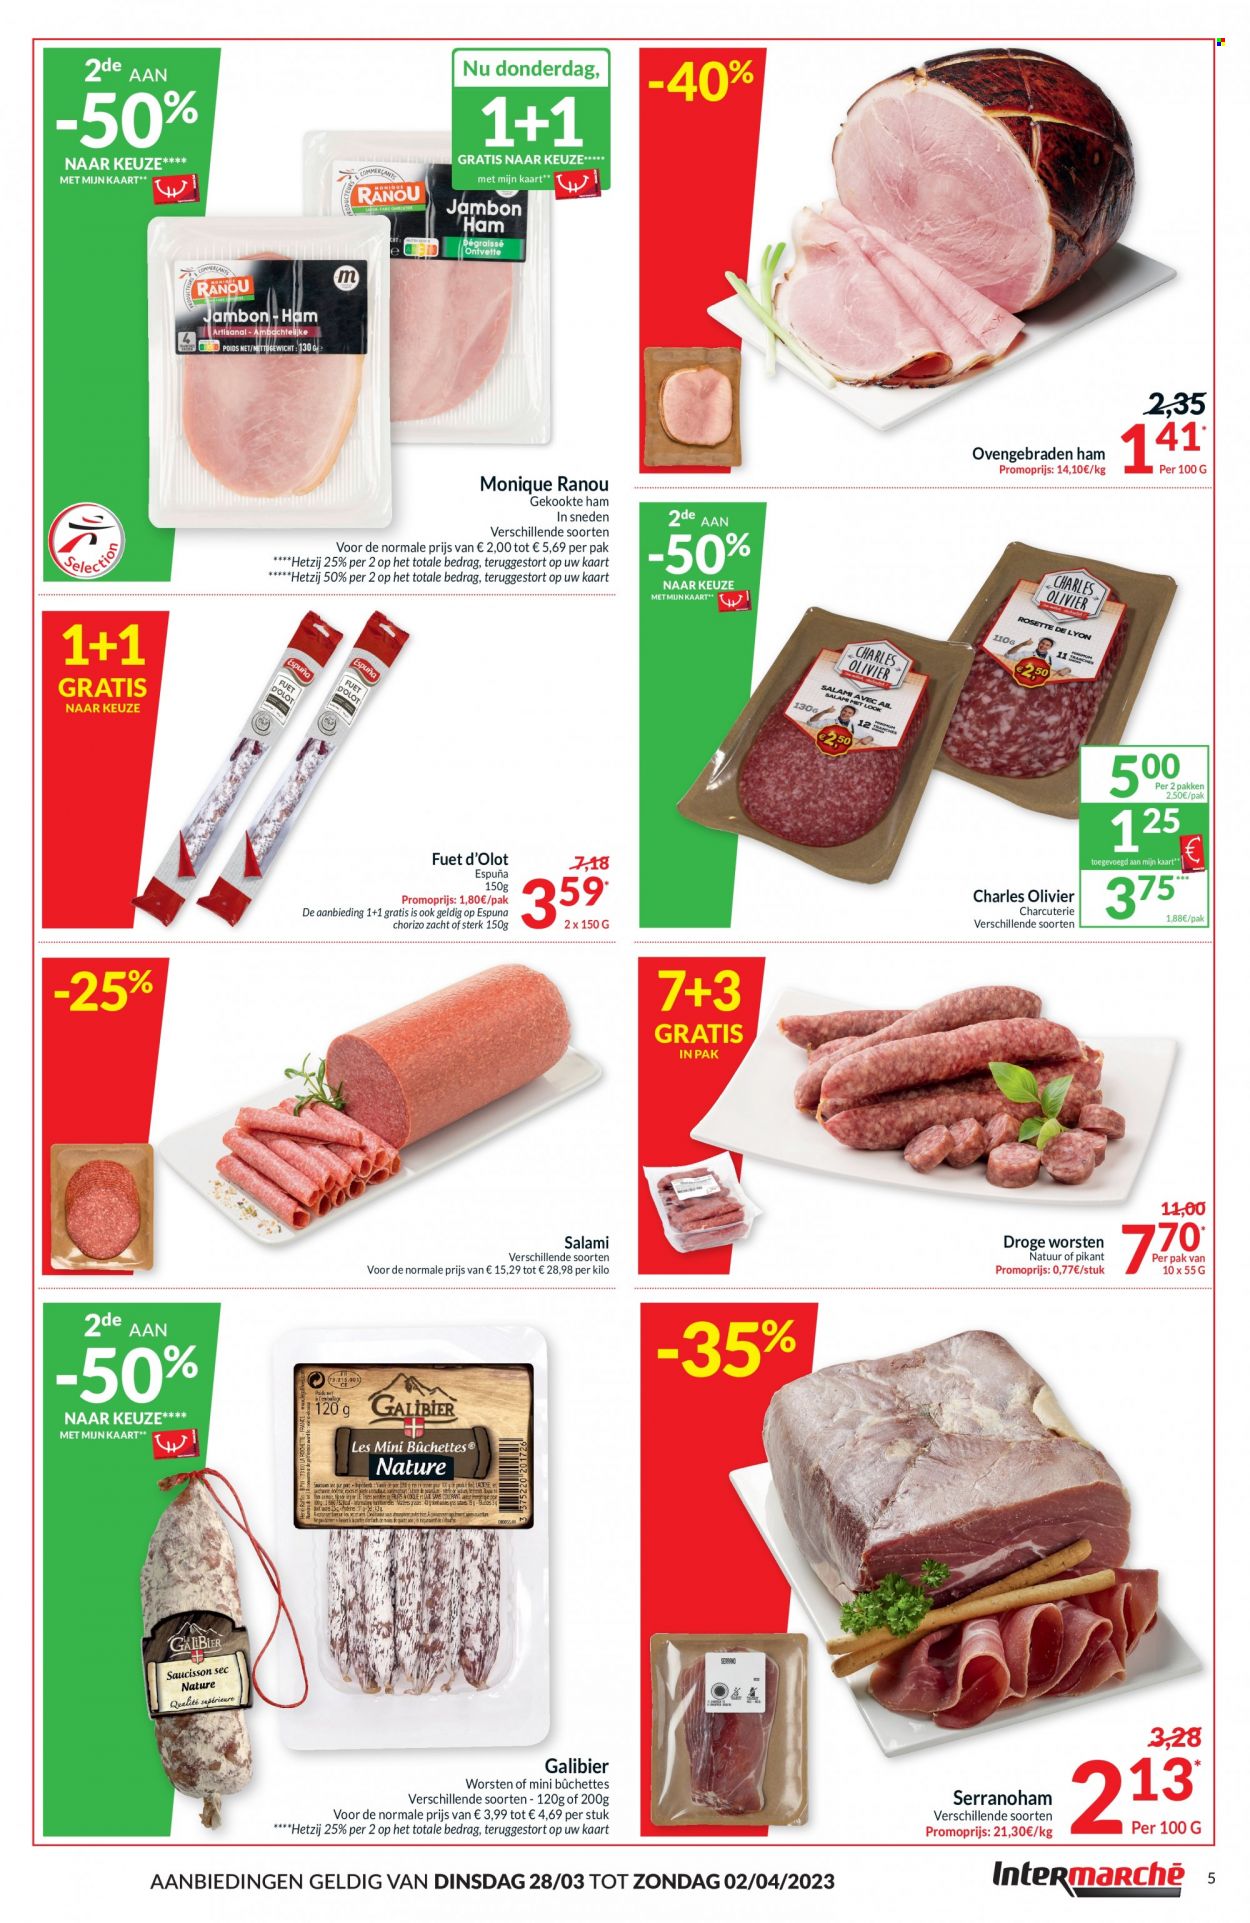 thumbnail - Intermarché-aanbieding - 28/03/2023 - 02/04/2023 -  producten in de aanbieding - ham, salami, serranoham, chorizo. Pagina 5.